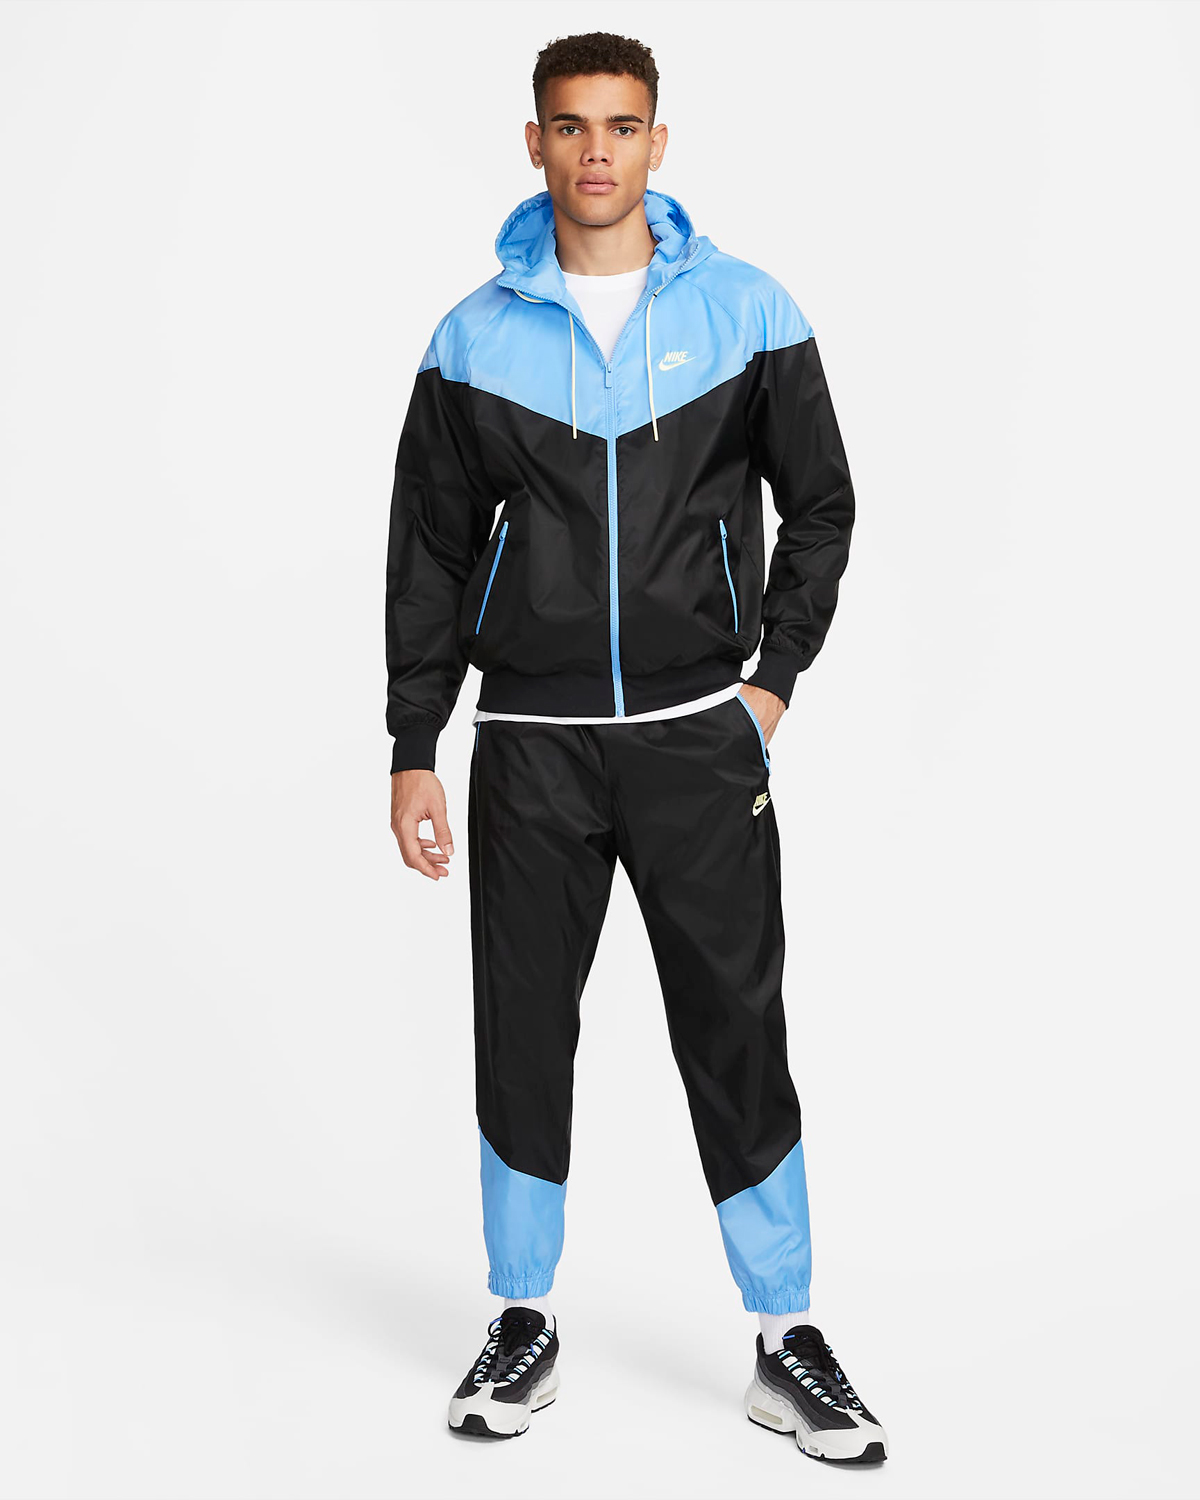 Nike-Windrunner-Jacket-Pants-Black-University-Blue